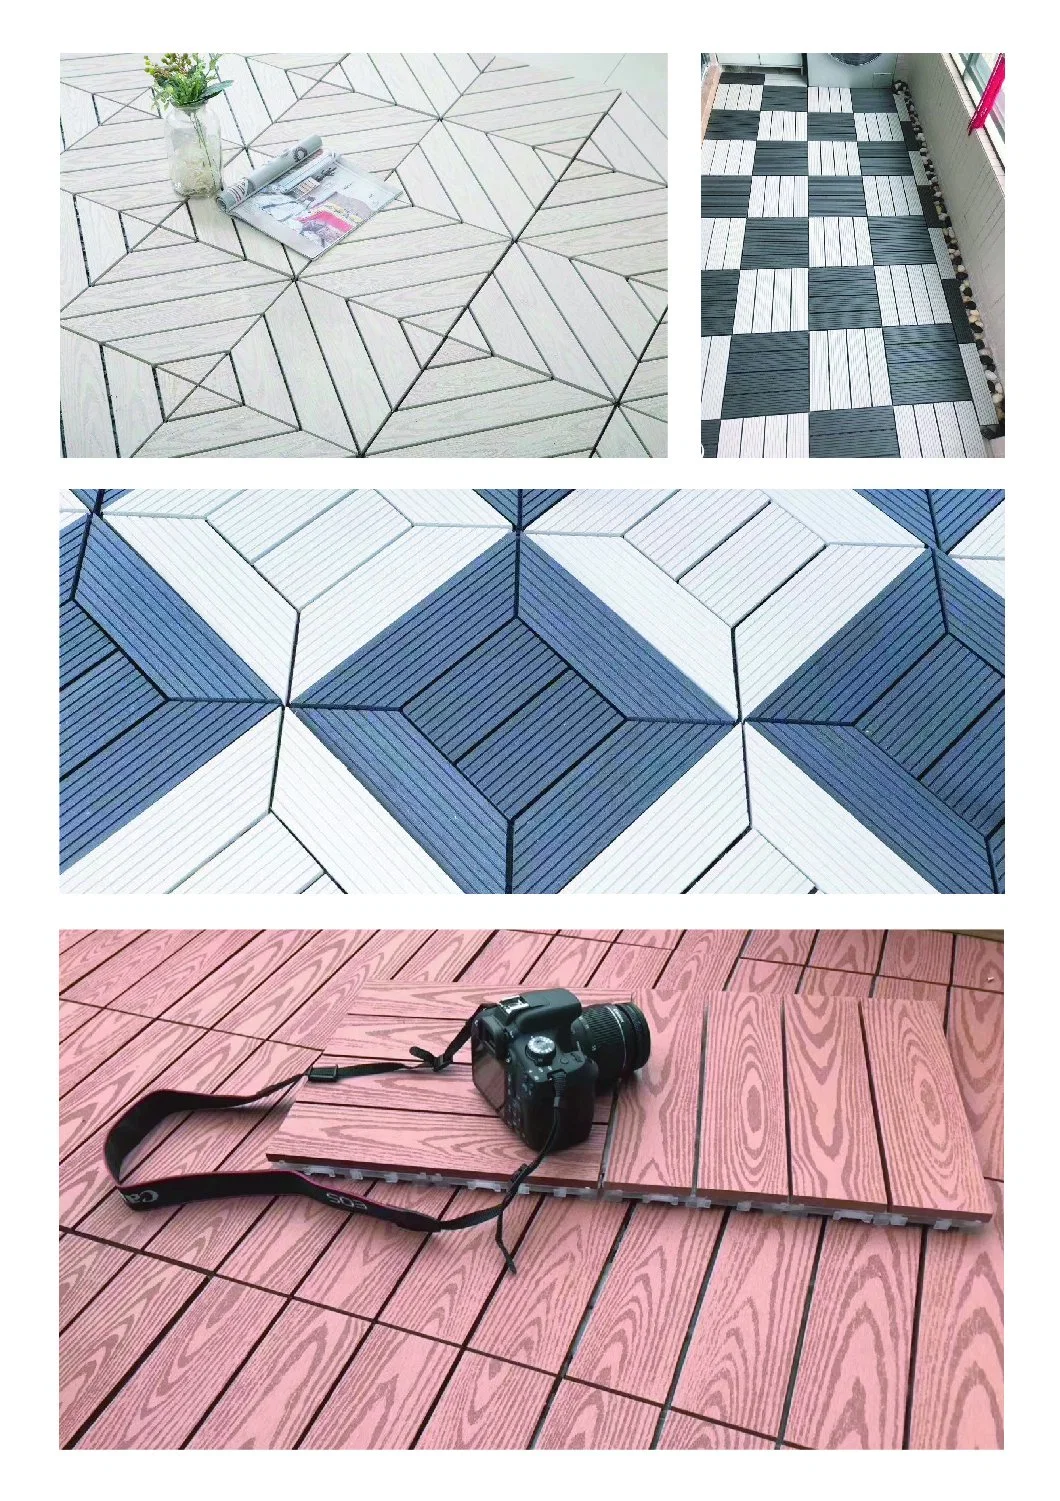 Interlocking Grids Household Bammax Timber Deck Tiles Plastic Basement Tile